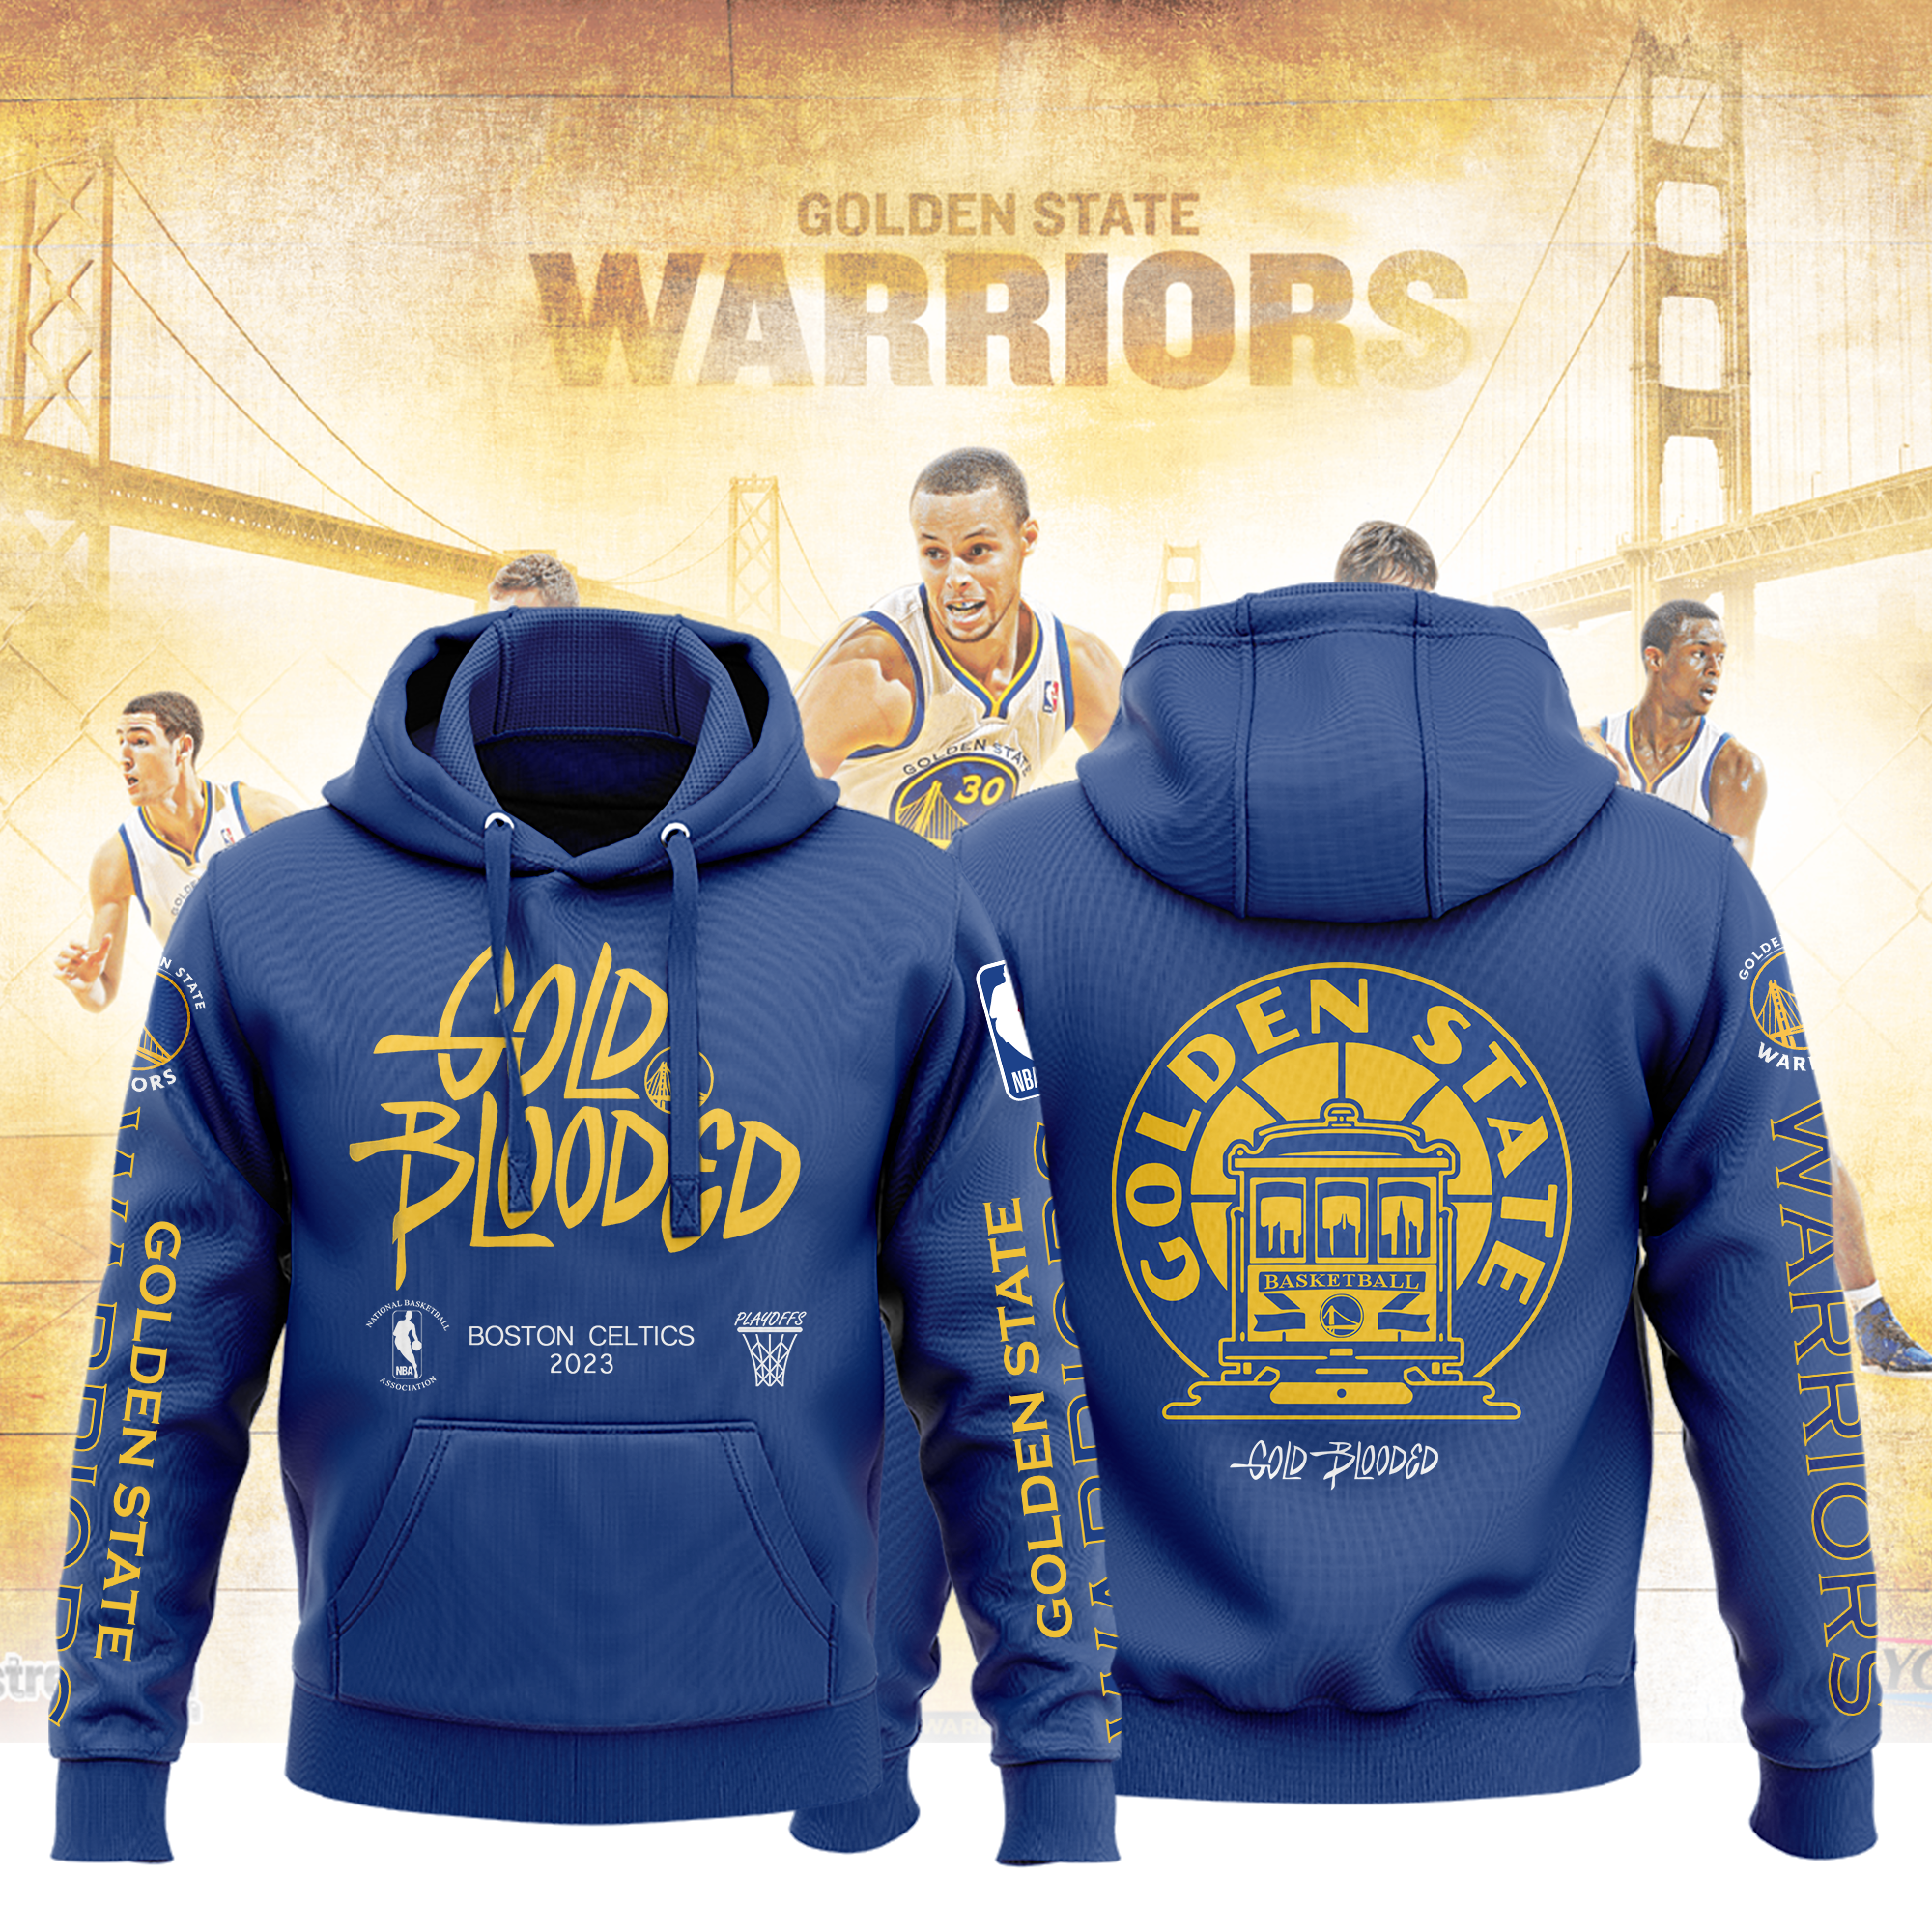 Newest design NBA Hoodies, NBA Sweatshirt, NBA Hoodies 3D, Golden state  Warriors Hoodies 3D